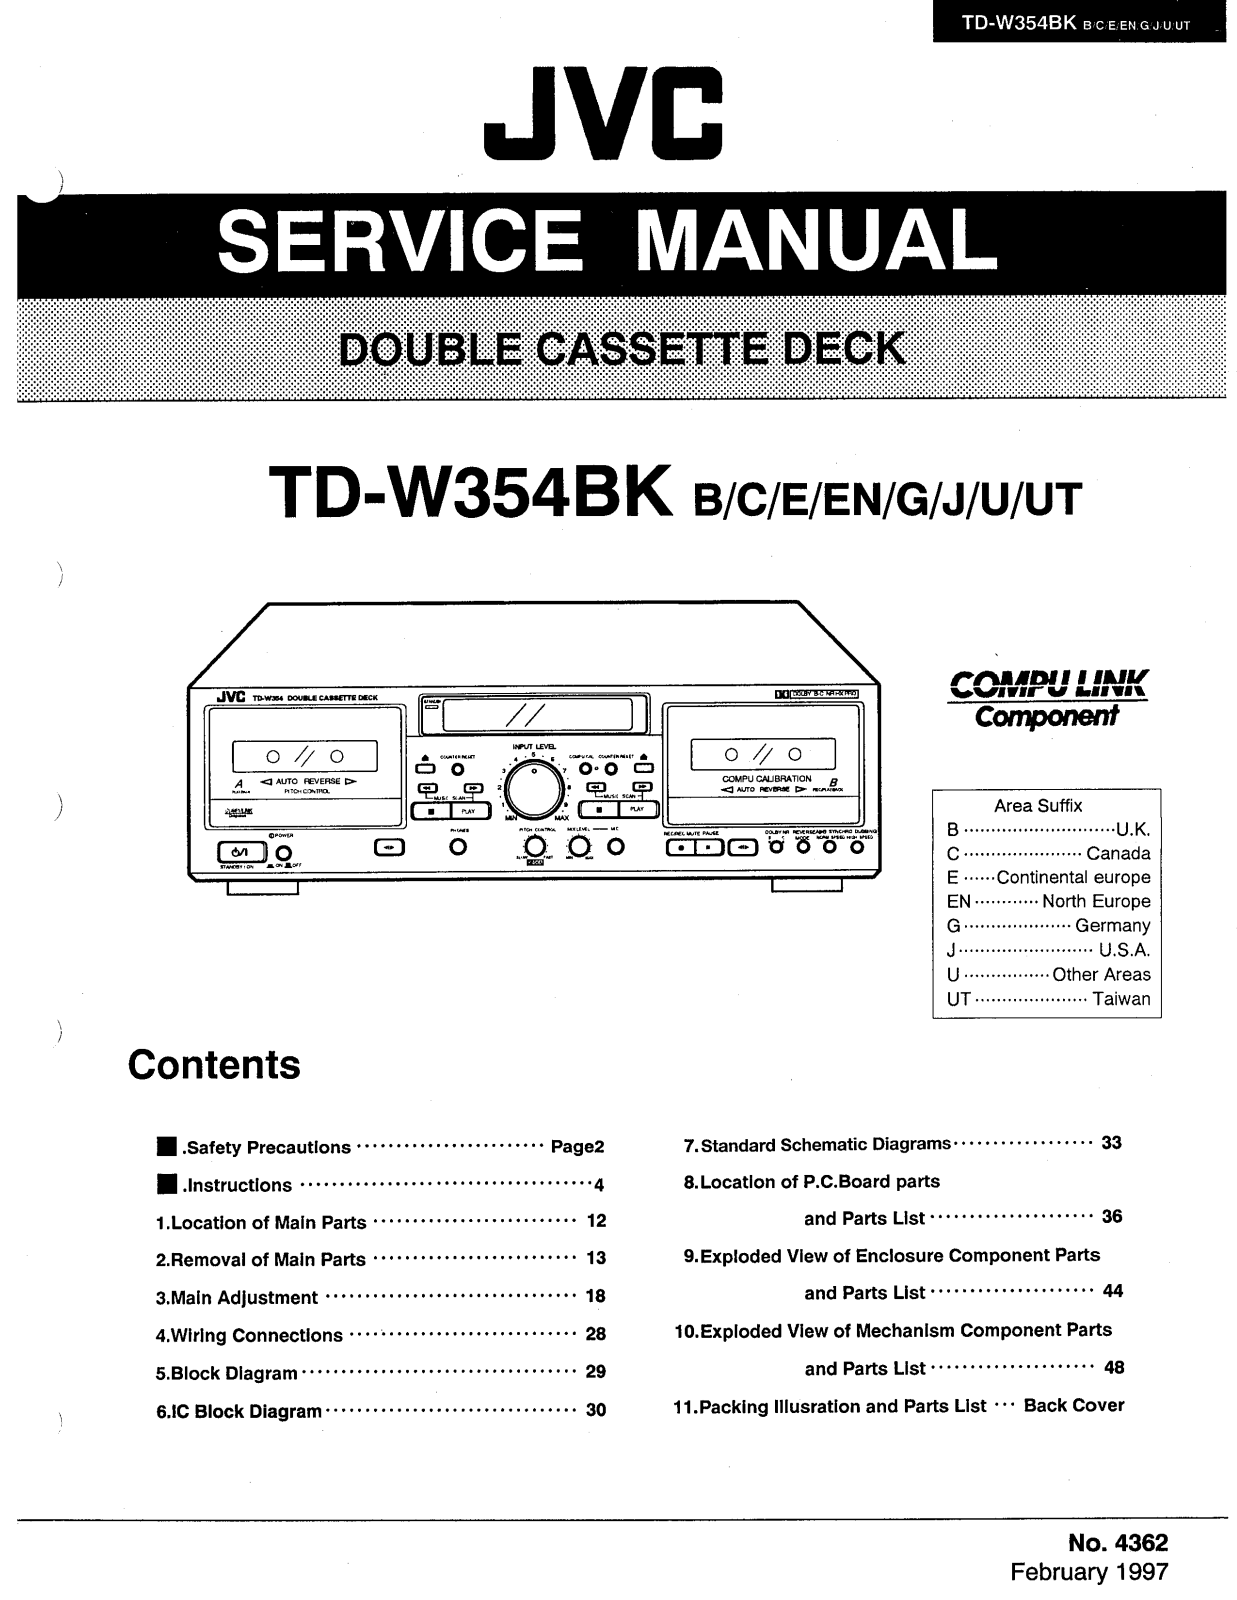 JVC TDW-354-BK Service manual